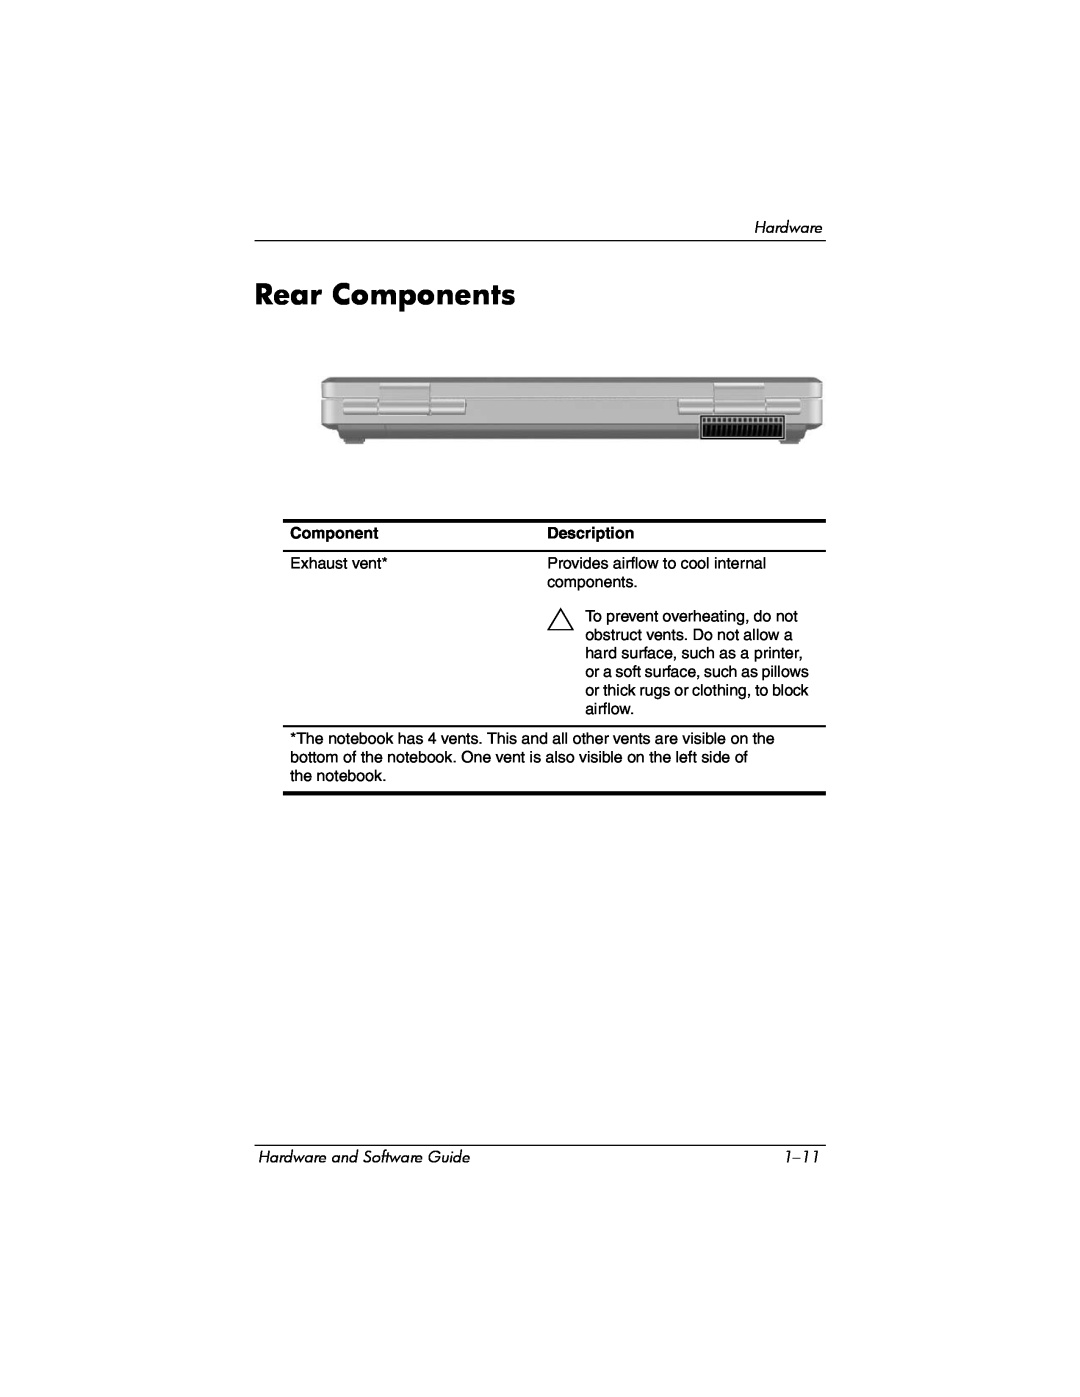 Compaq Presario M2000 manual Rear Components, Description 